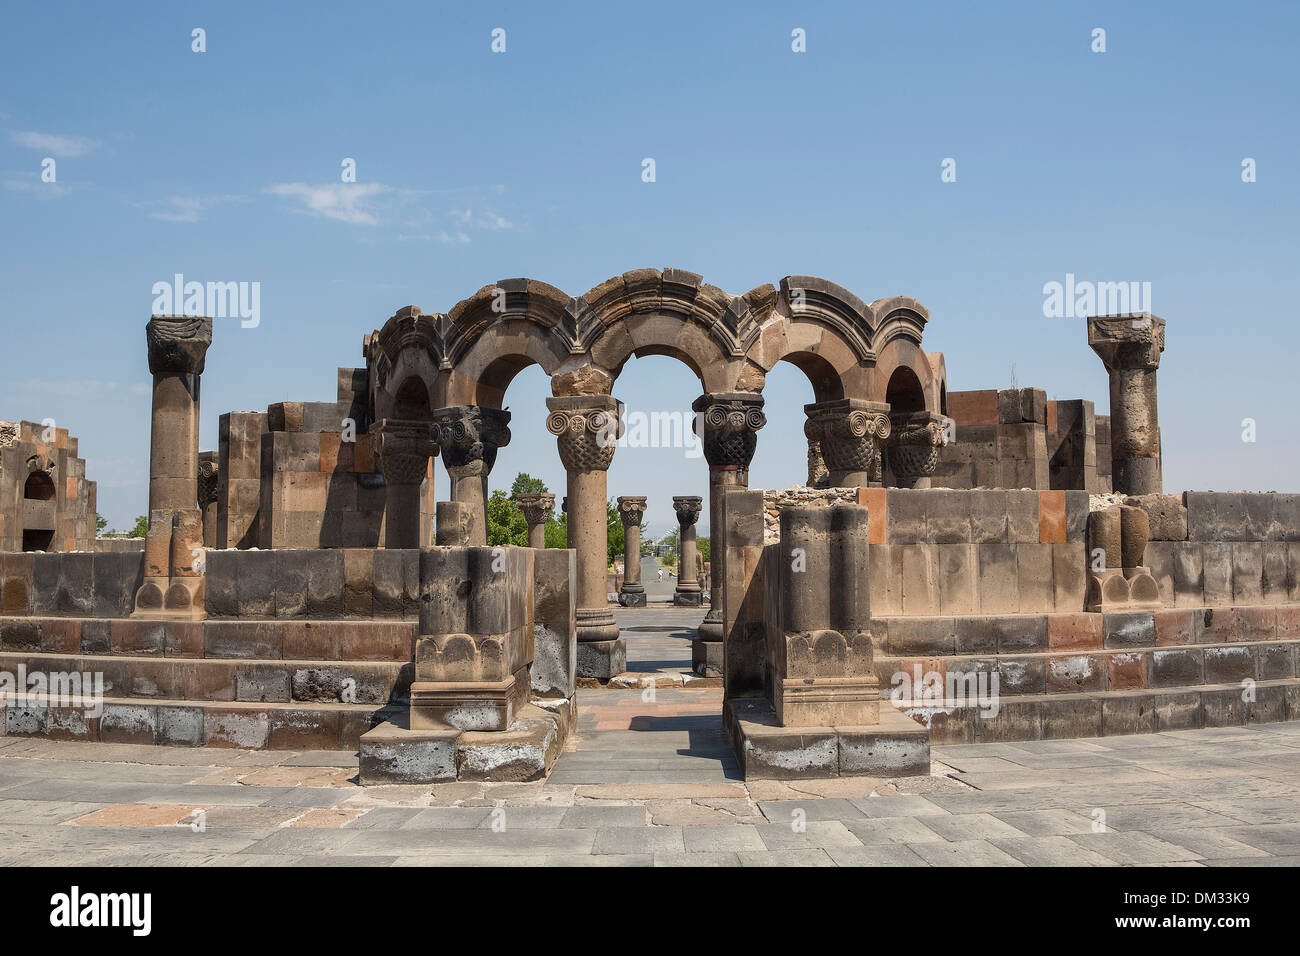 Armenia, South Caucasus, Caucasus, Eurasia, Temple, world heritage, Unesco, site, Zvartnots, arches, hall, ruins Stock Photo